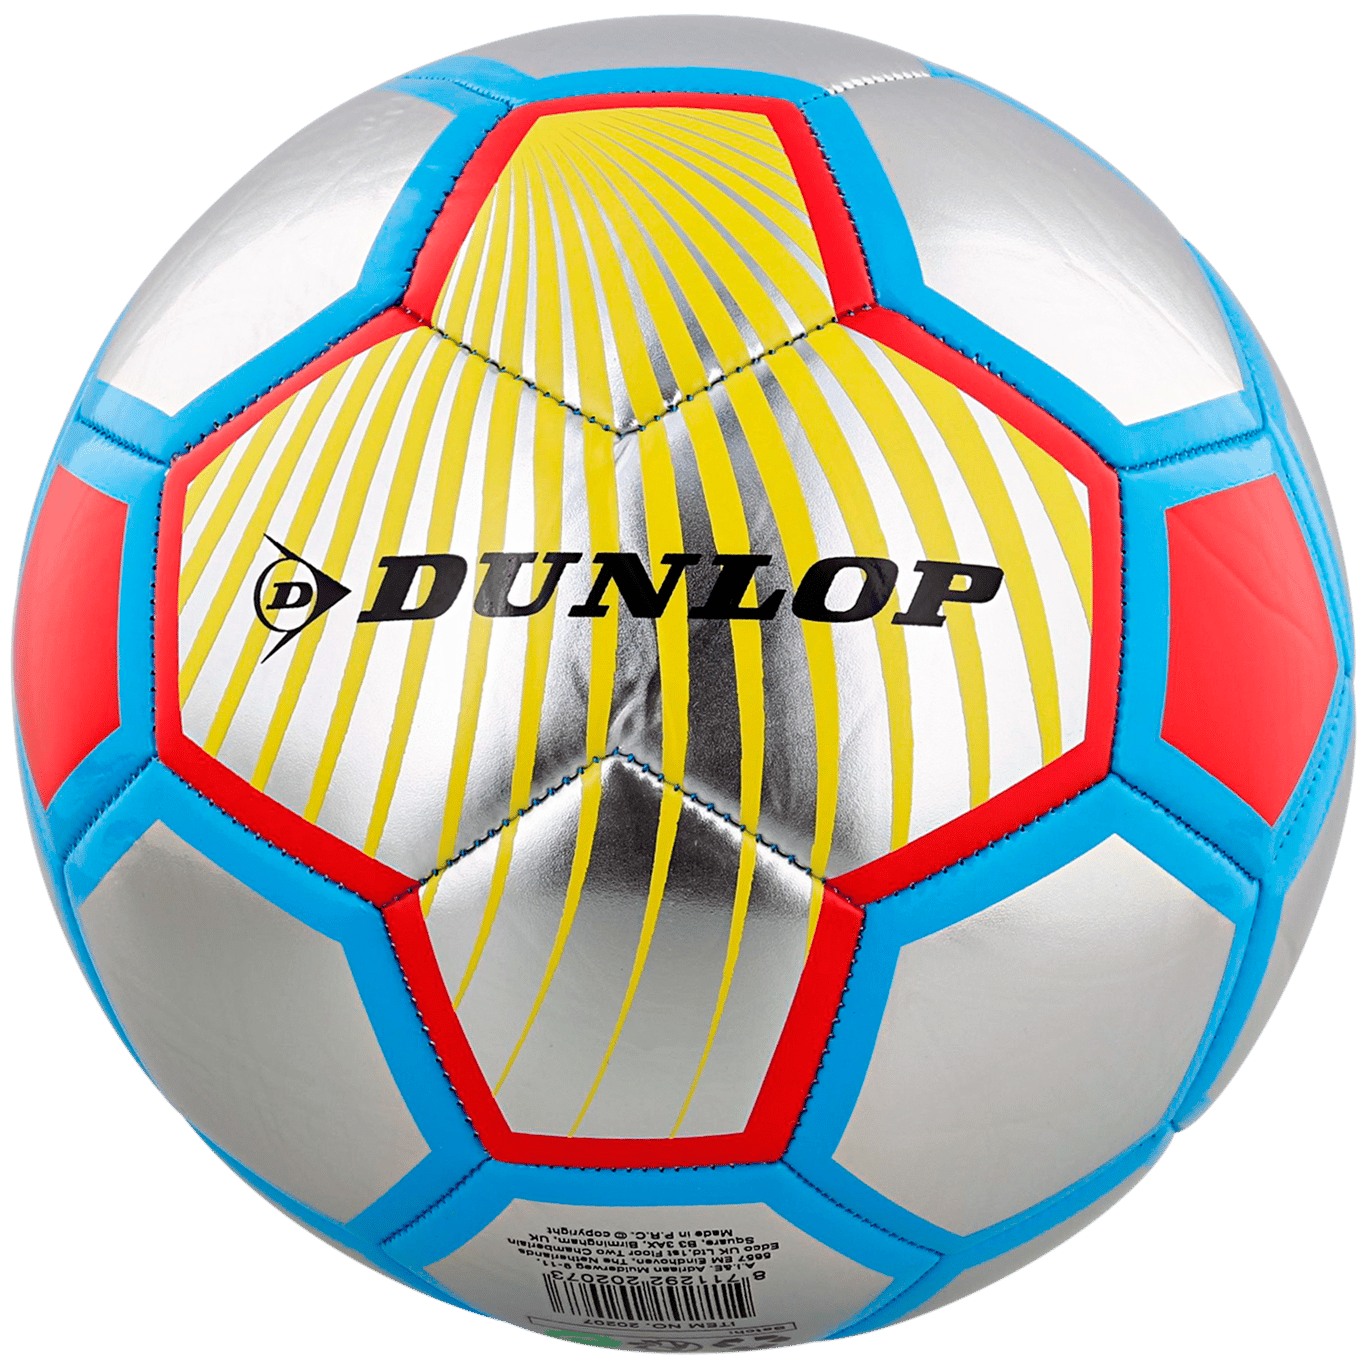 is er omdraaien Confronteren Dunlop voetbal | Action.com